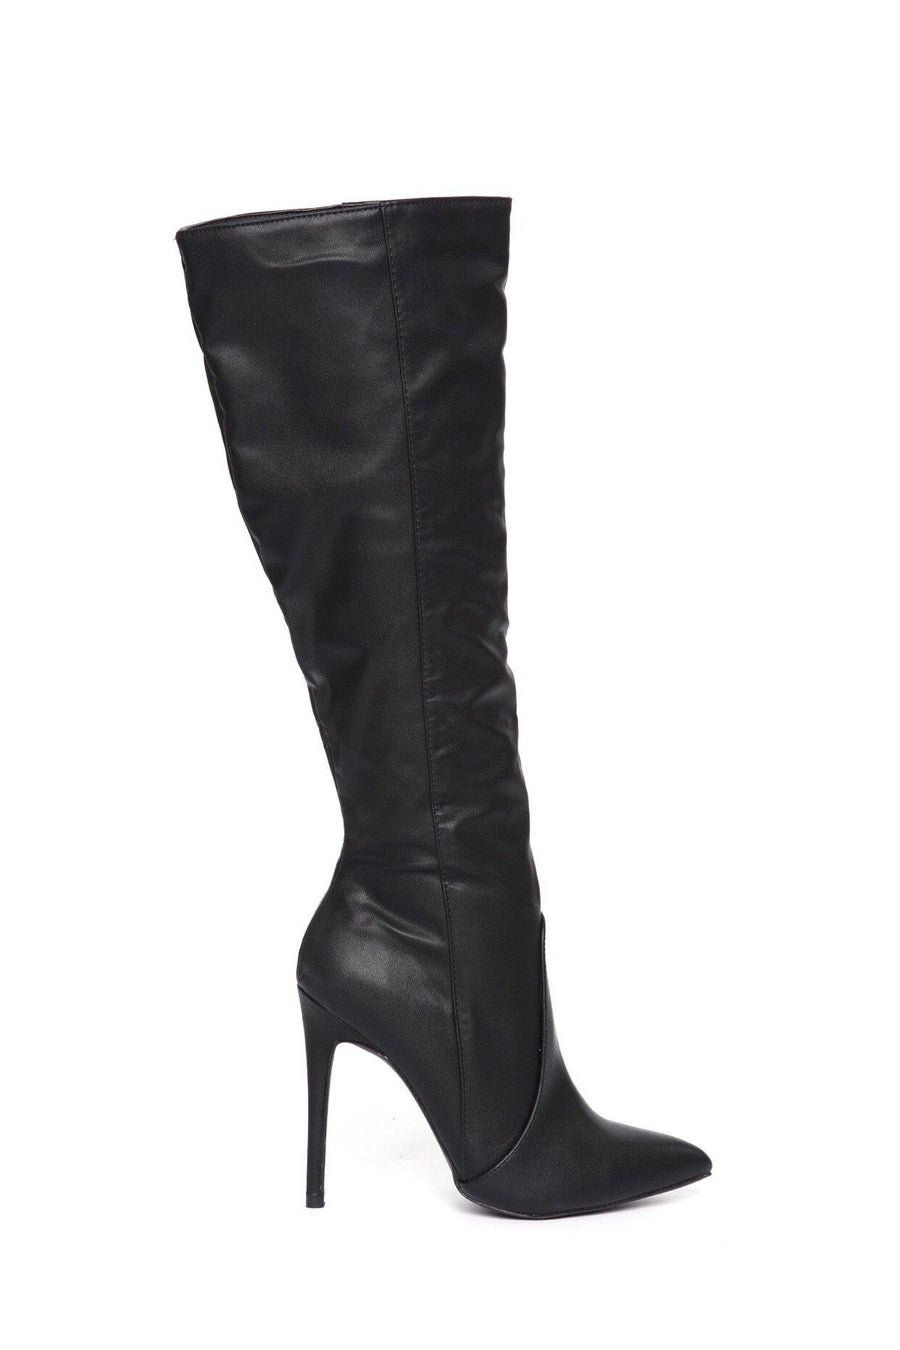 Giselle Leather Mid Calf Black Boots - Dimesi Boutique